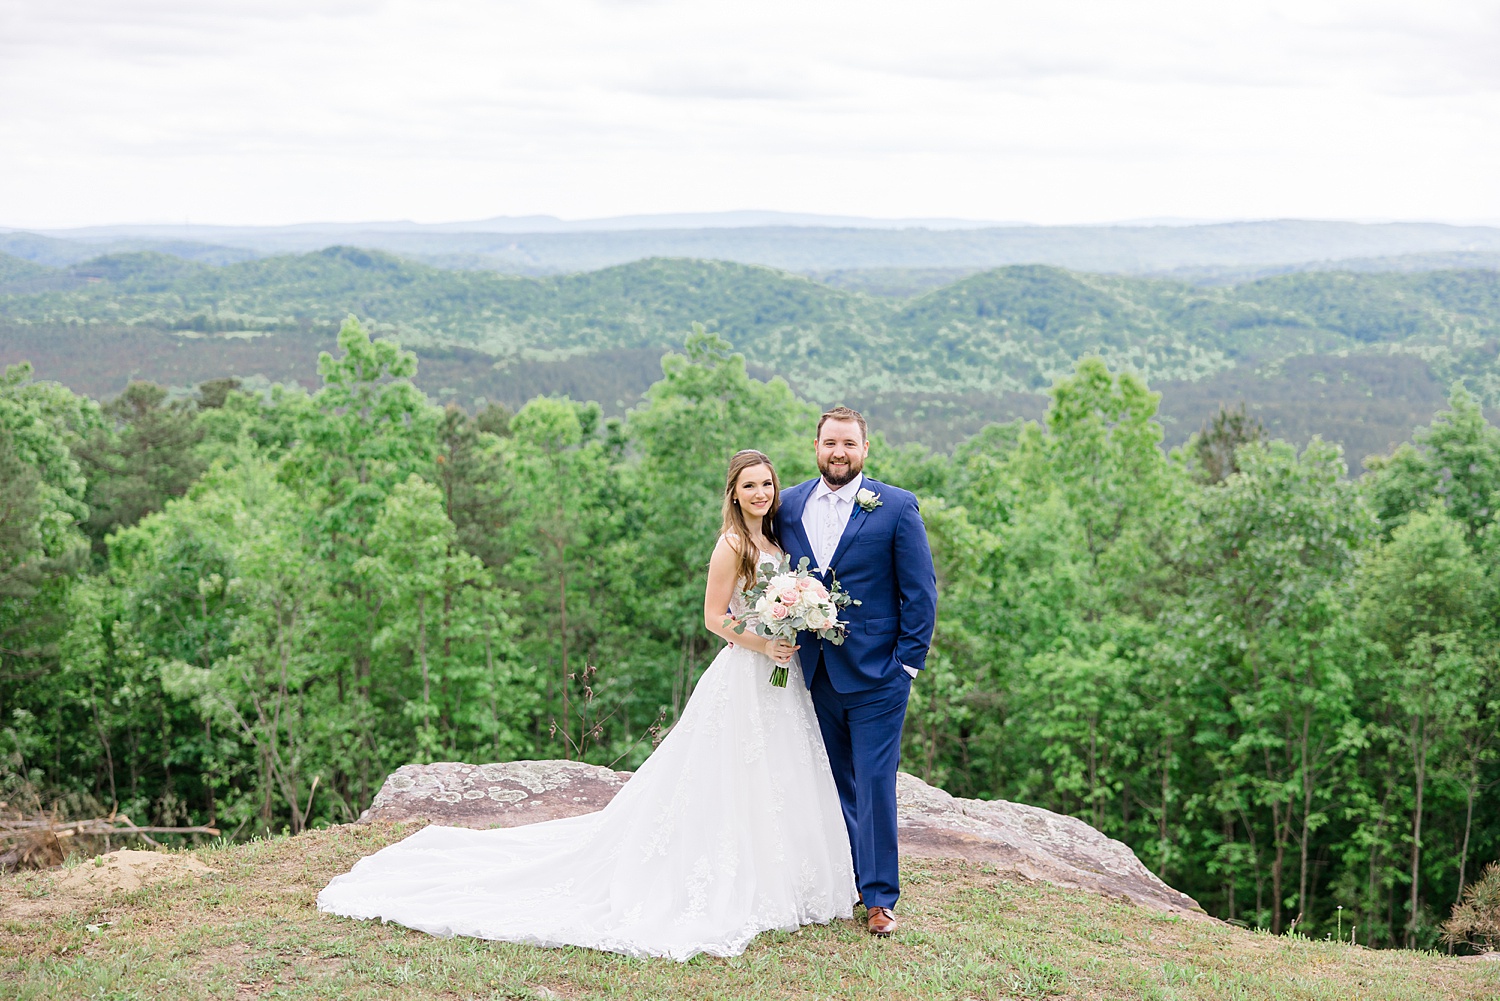 wedding portraits on top of hill overlooking rolling hills and valleys below 